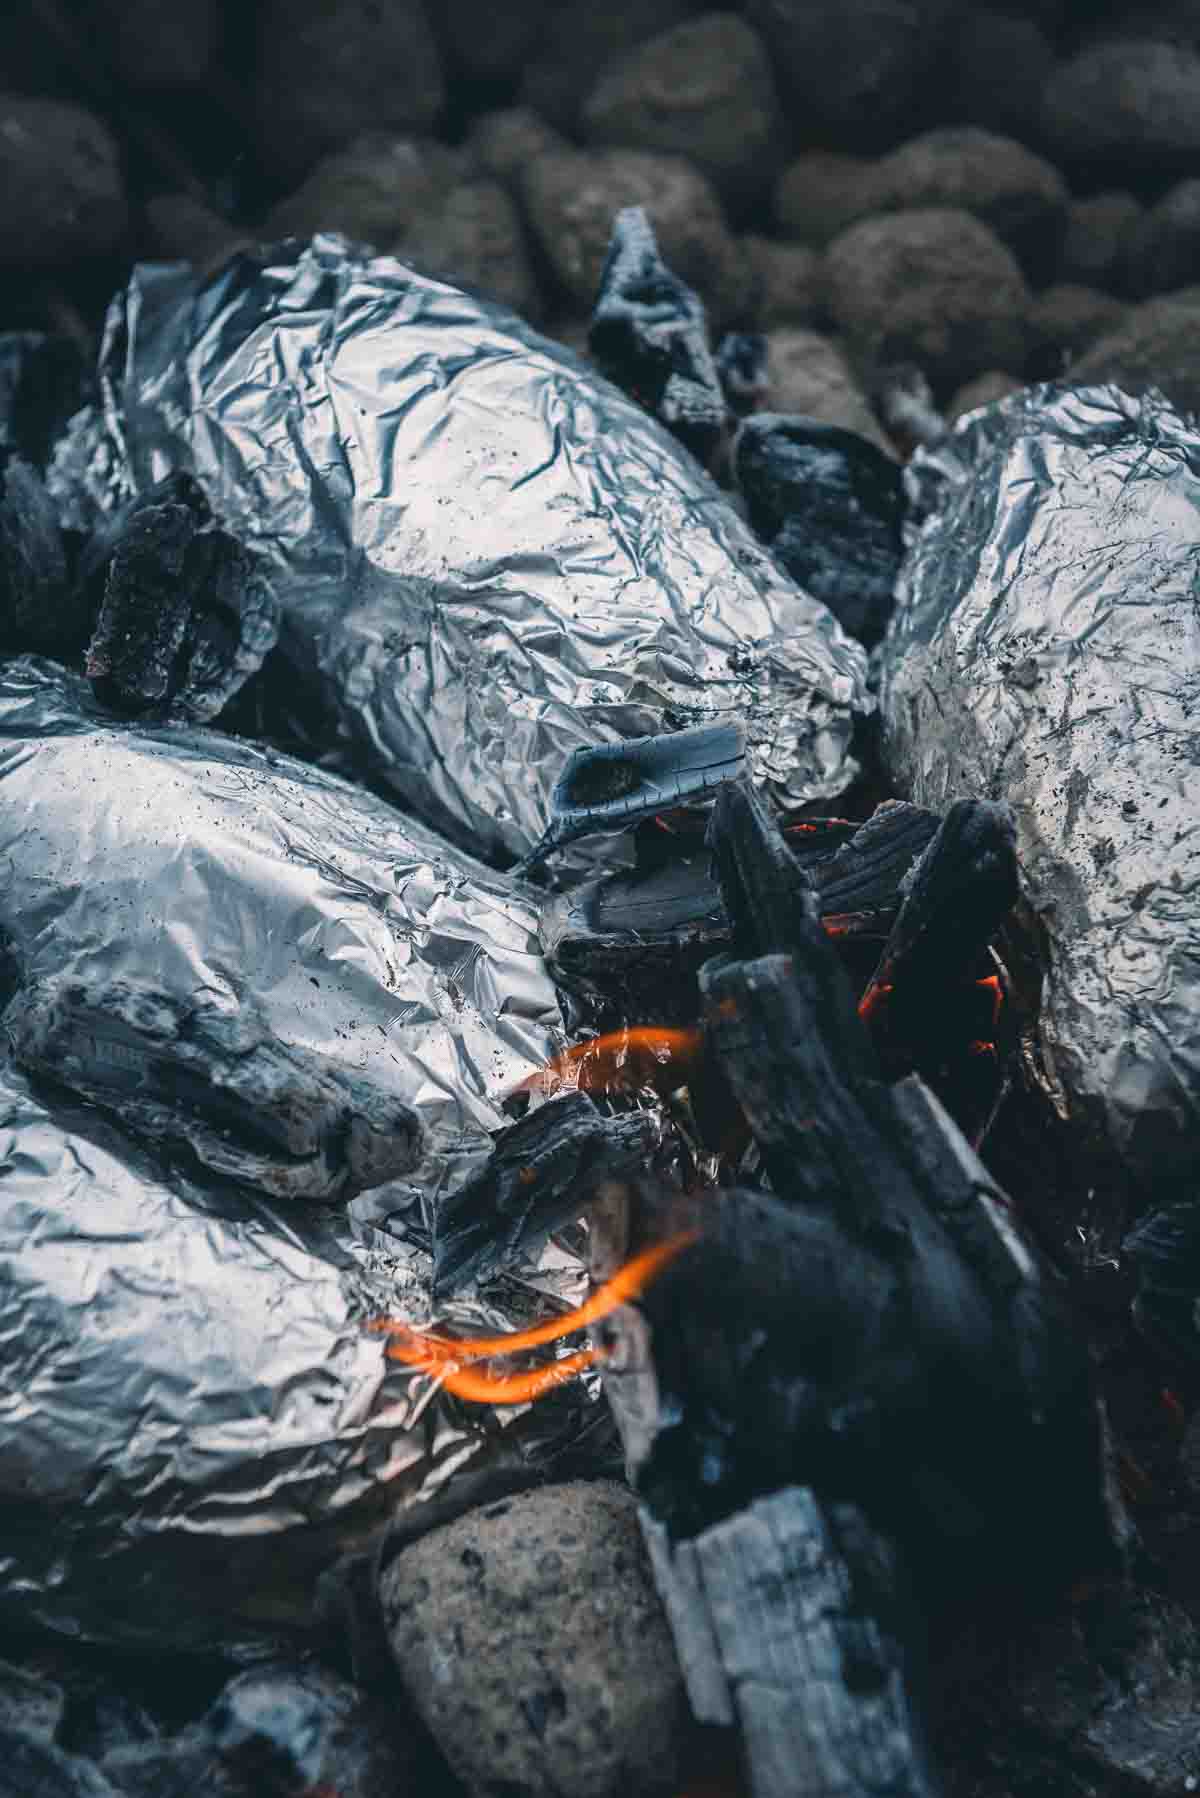 Potatoes in glowing charcoal embers. 